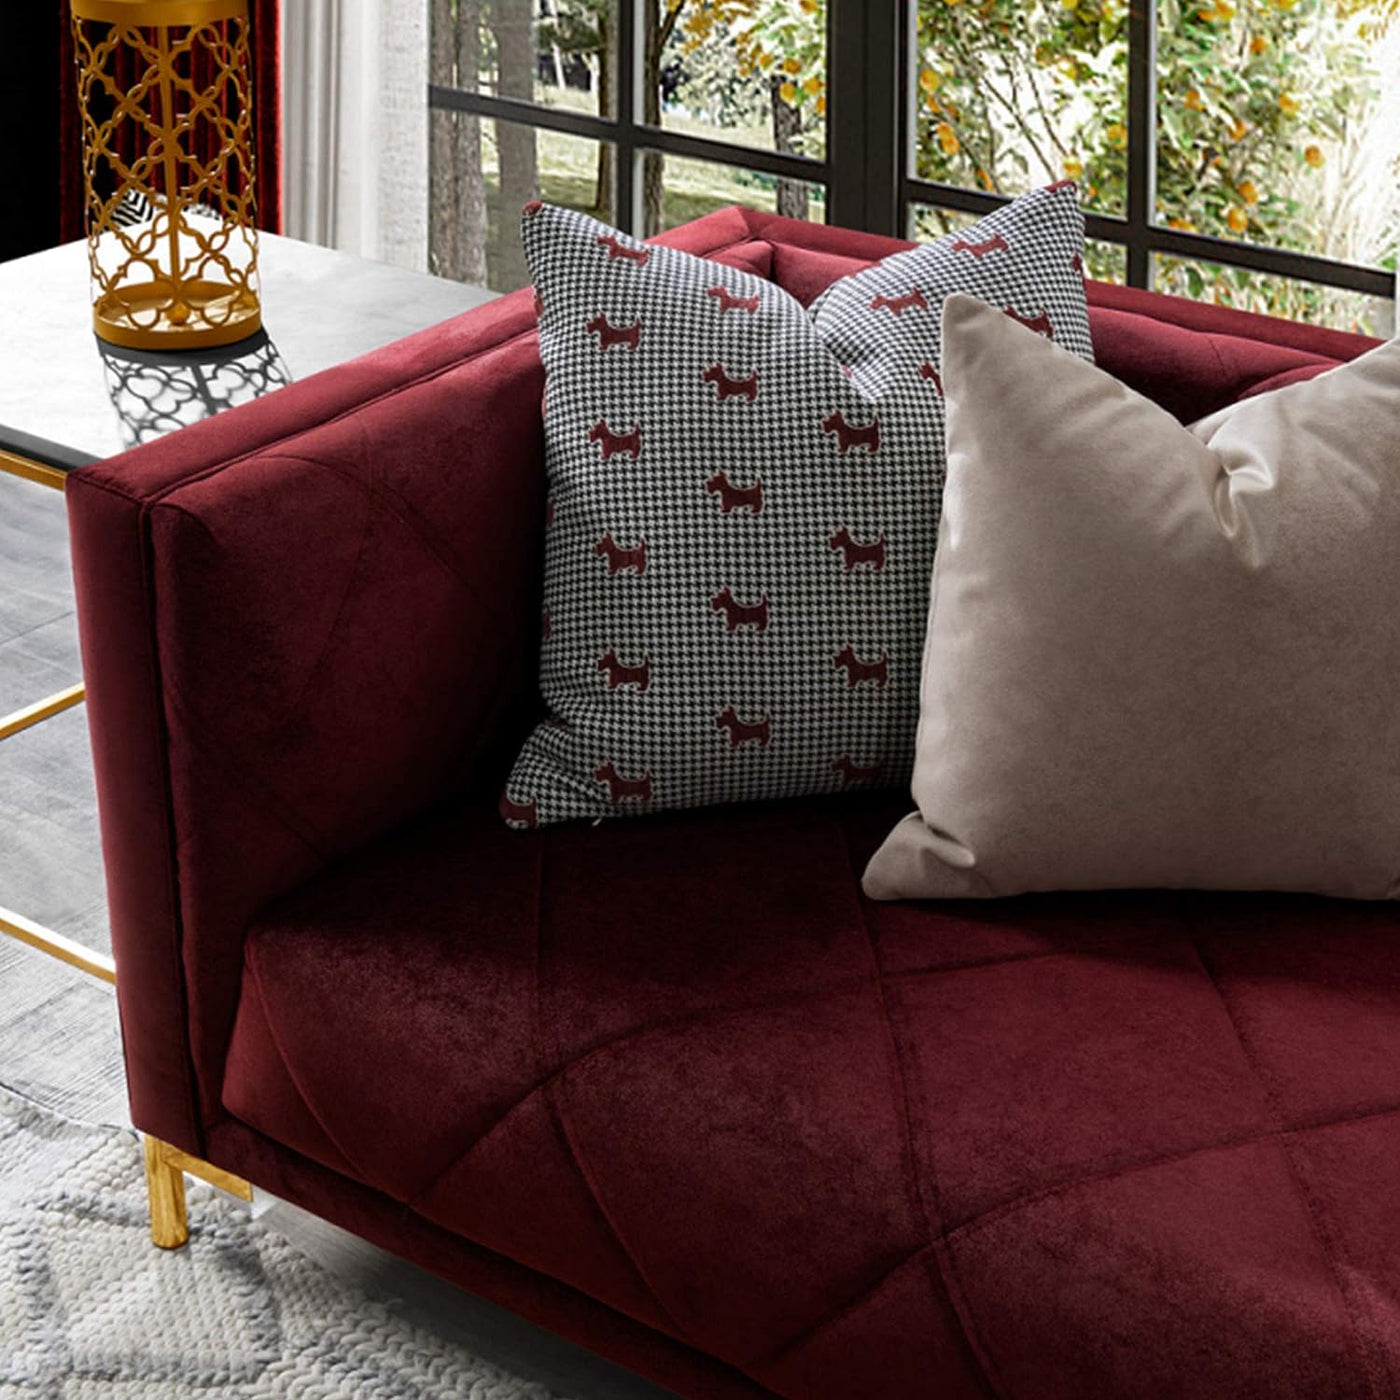 Acanva Modern Mid-Century Sofa with Velvet Upholstered Fabric - $600